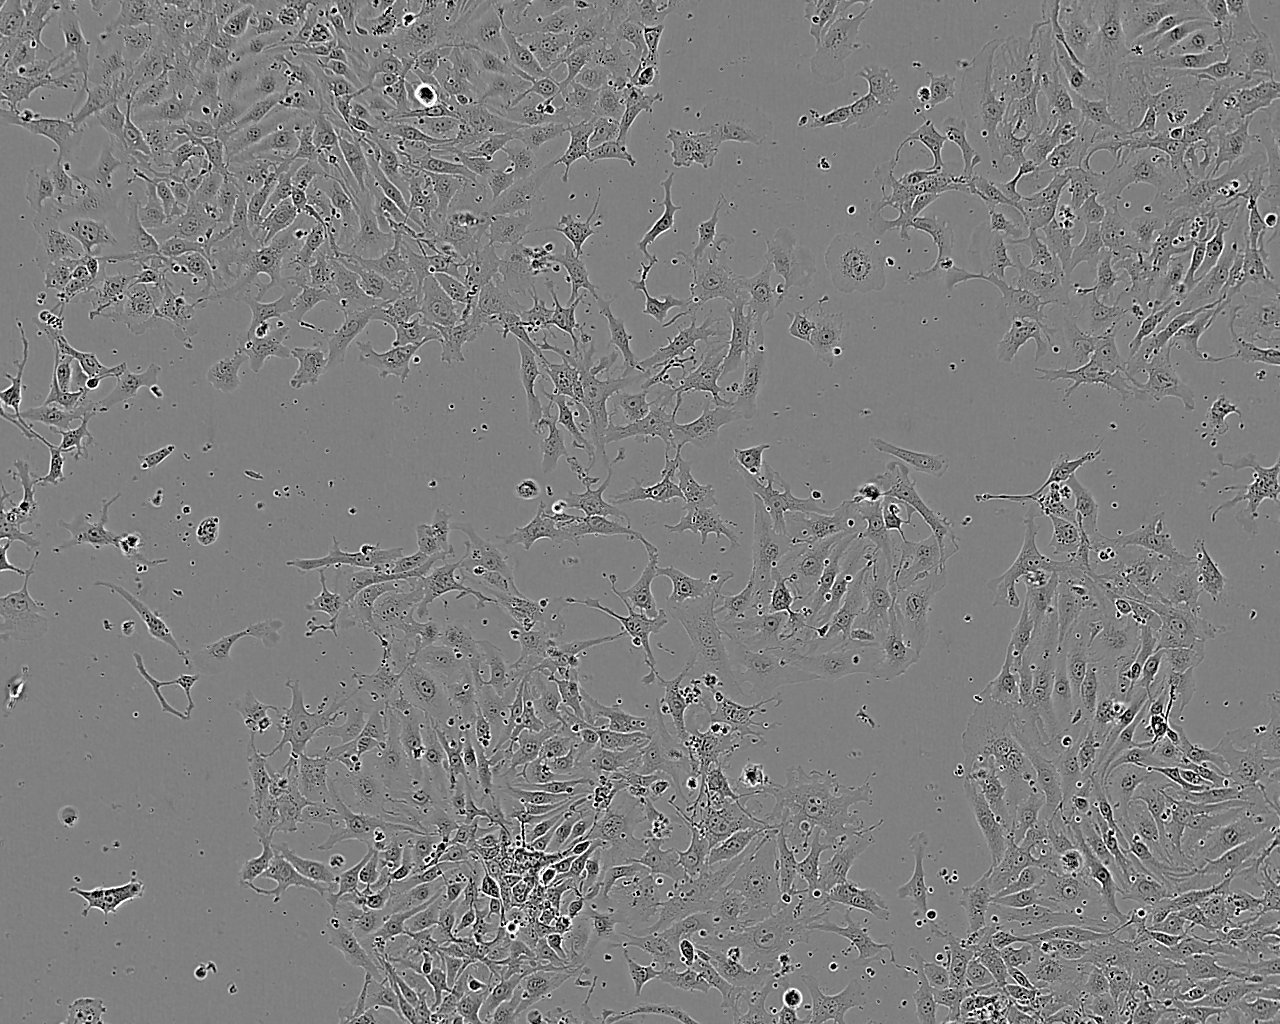 SNU-16 epithelioid cells人胃癌细胞系,SNU-16 epithelioid cells